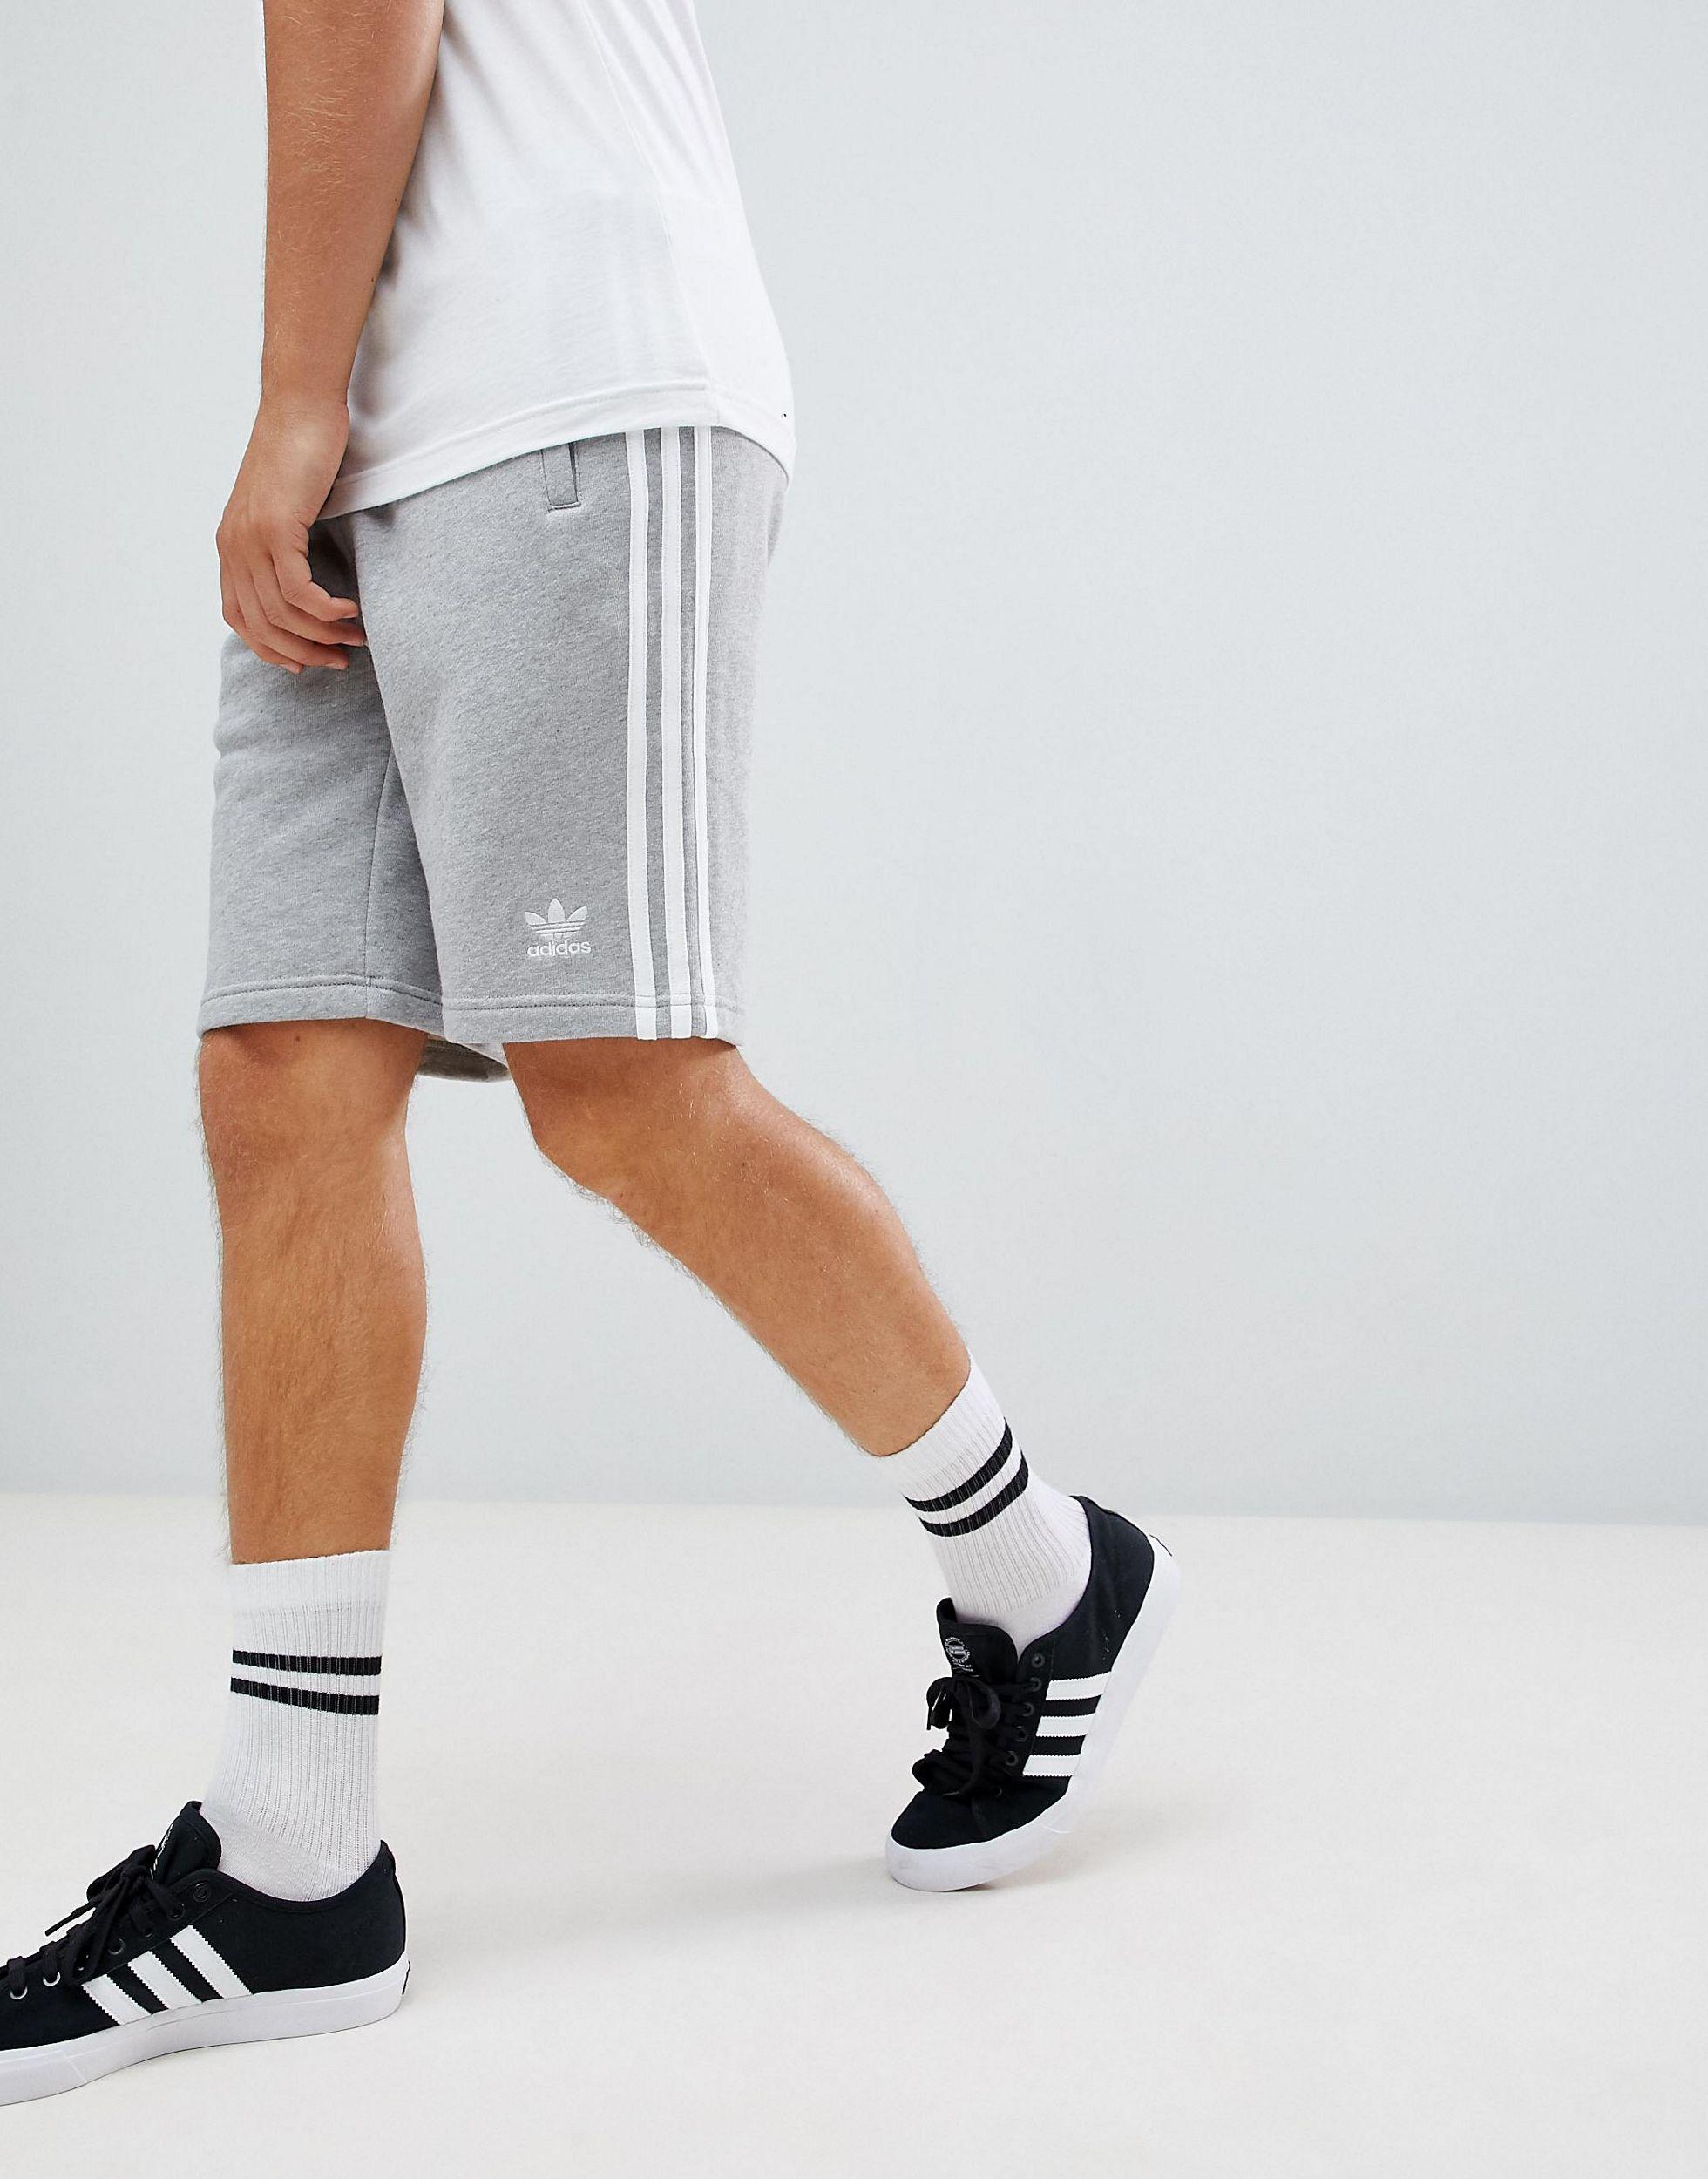 adidas Cotton Three Stripe Shorts Grey in Gray for Men - Lyst